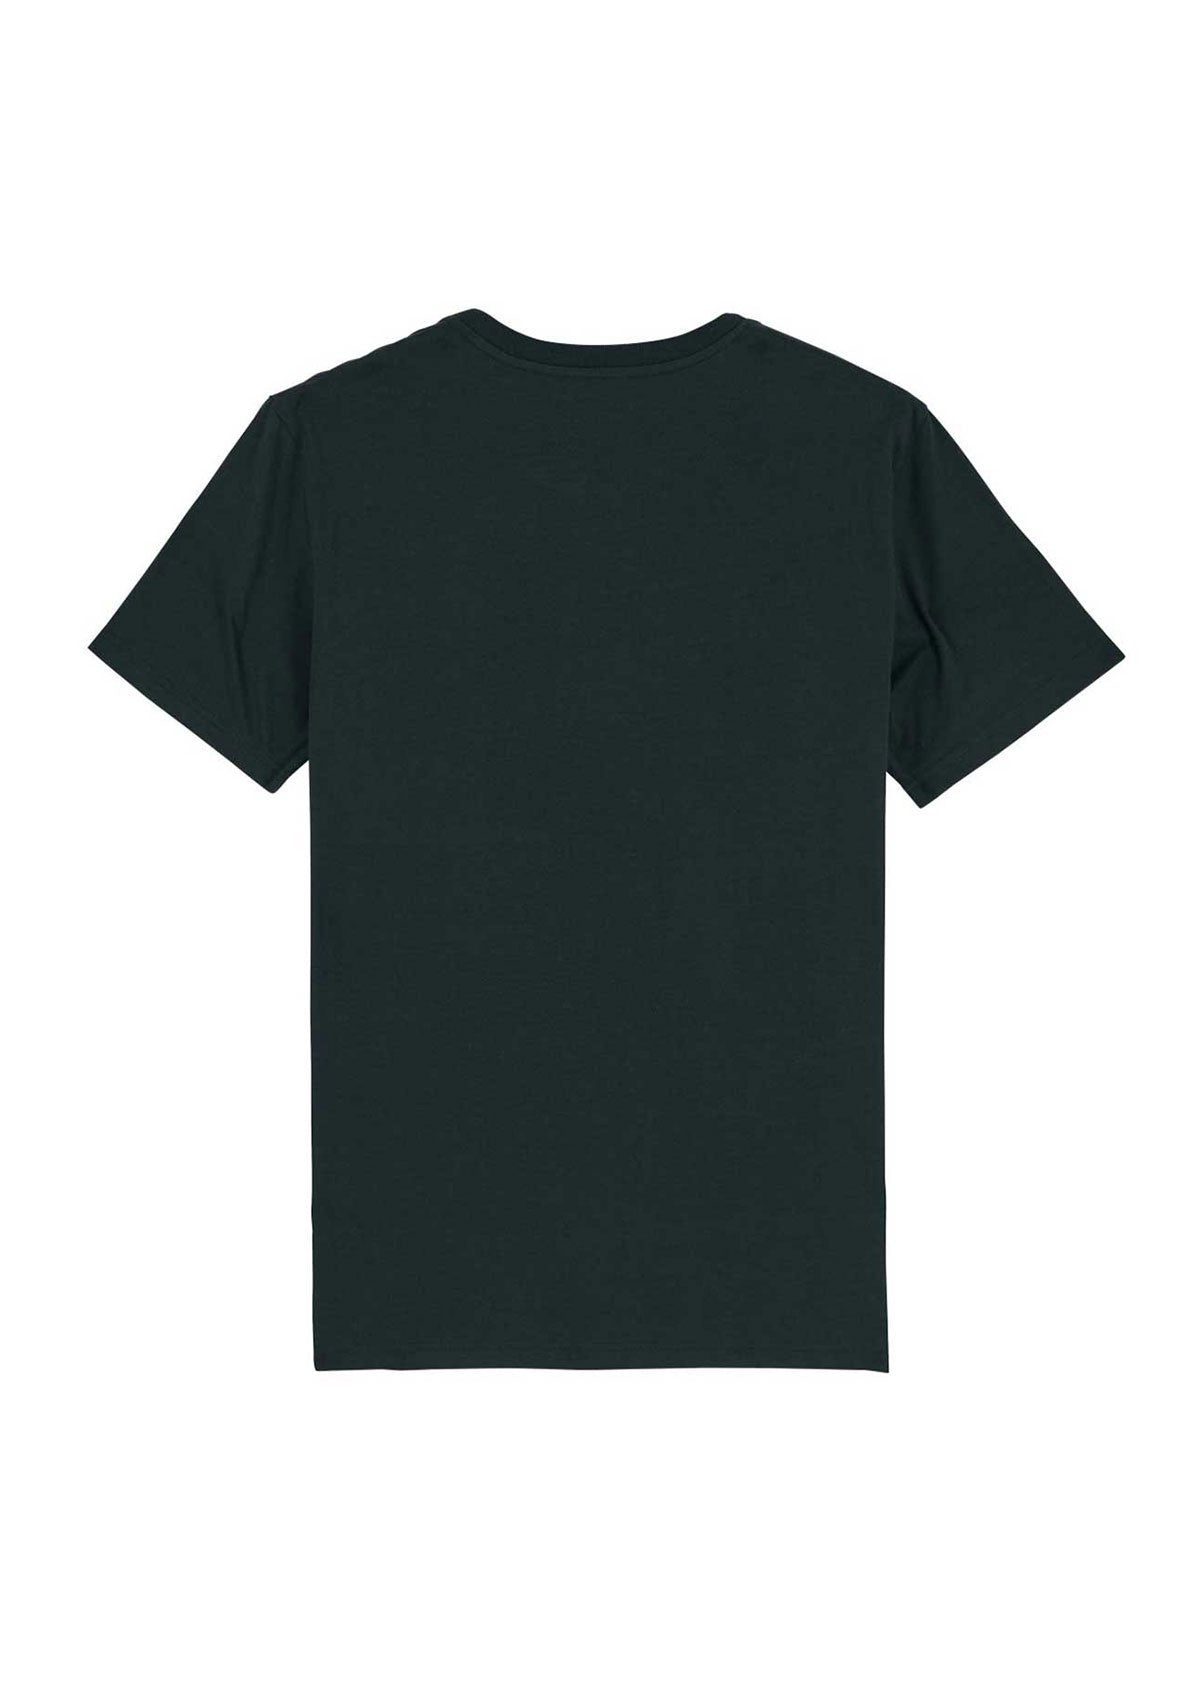 Unisex Basic T-Shirt - Black - wise enough